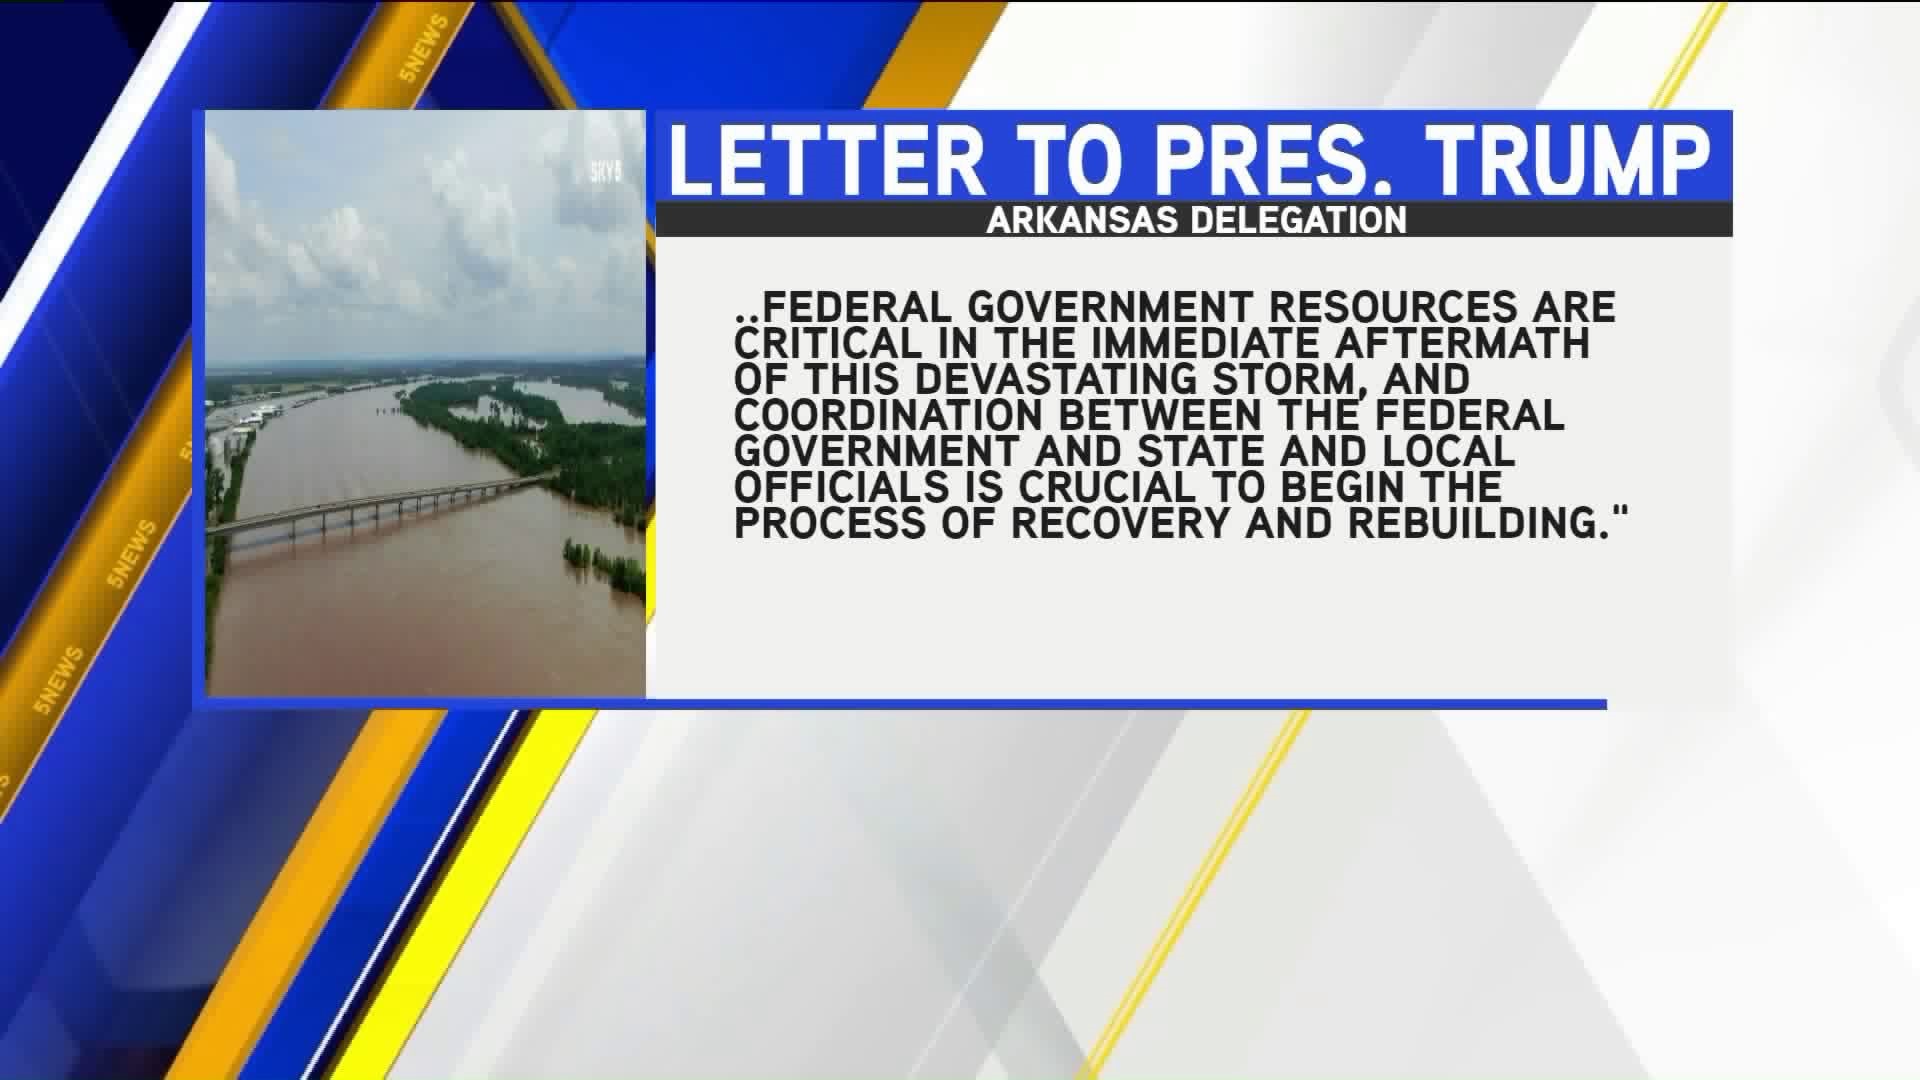 Arkansas Lawmakers Letter to Trump